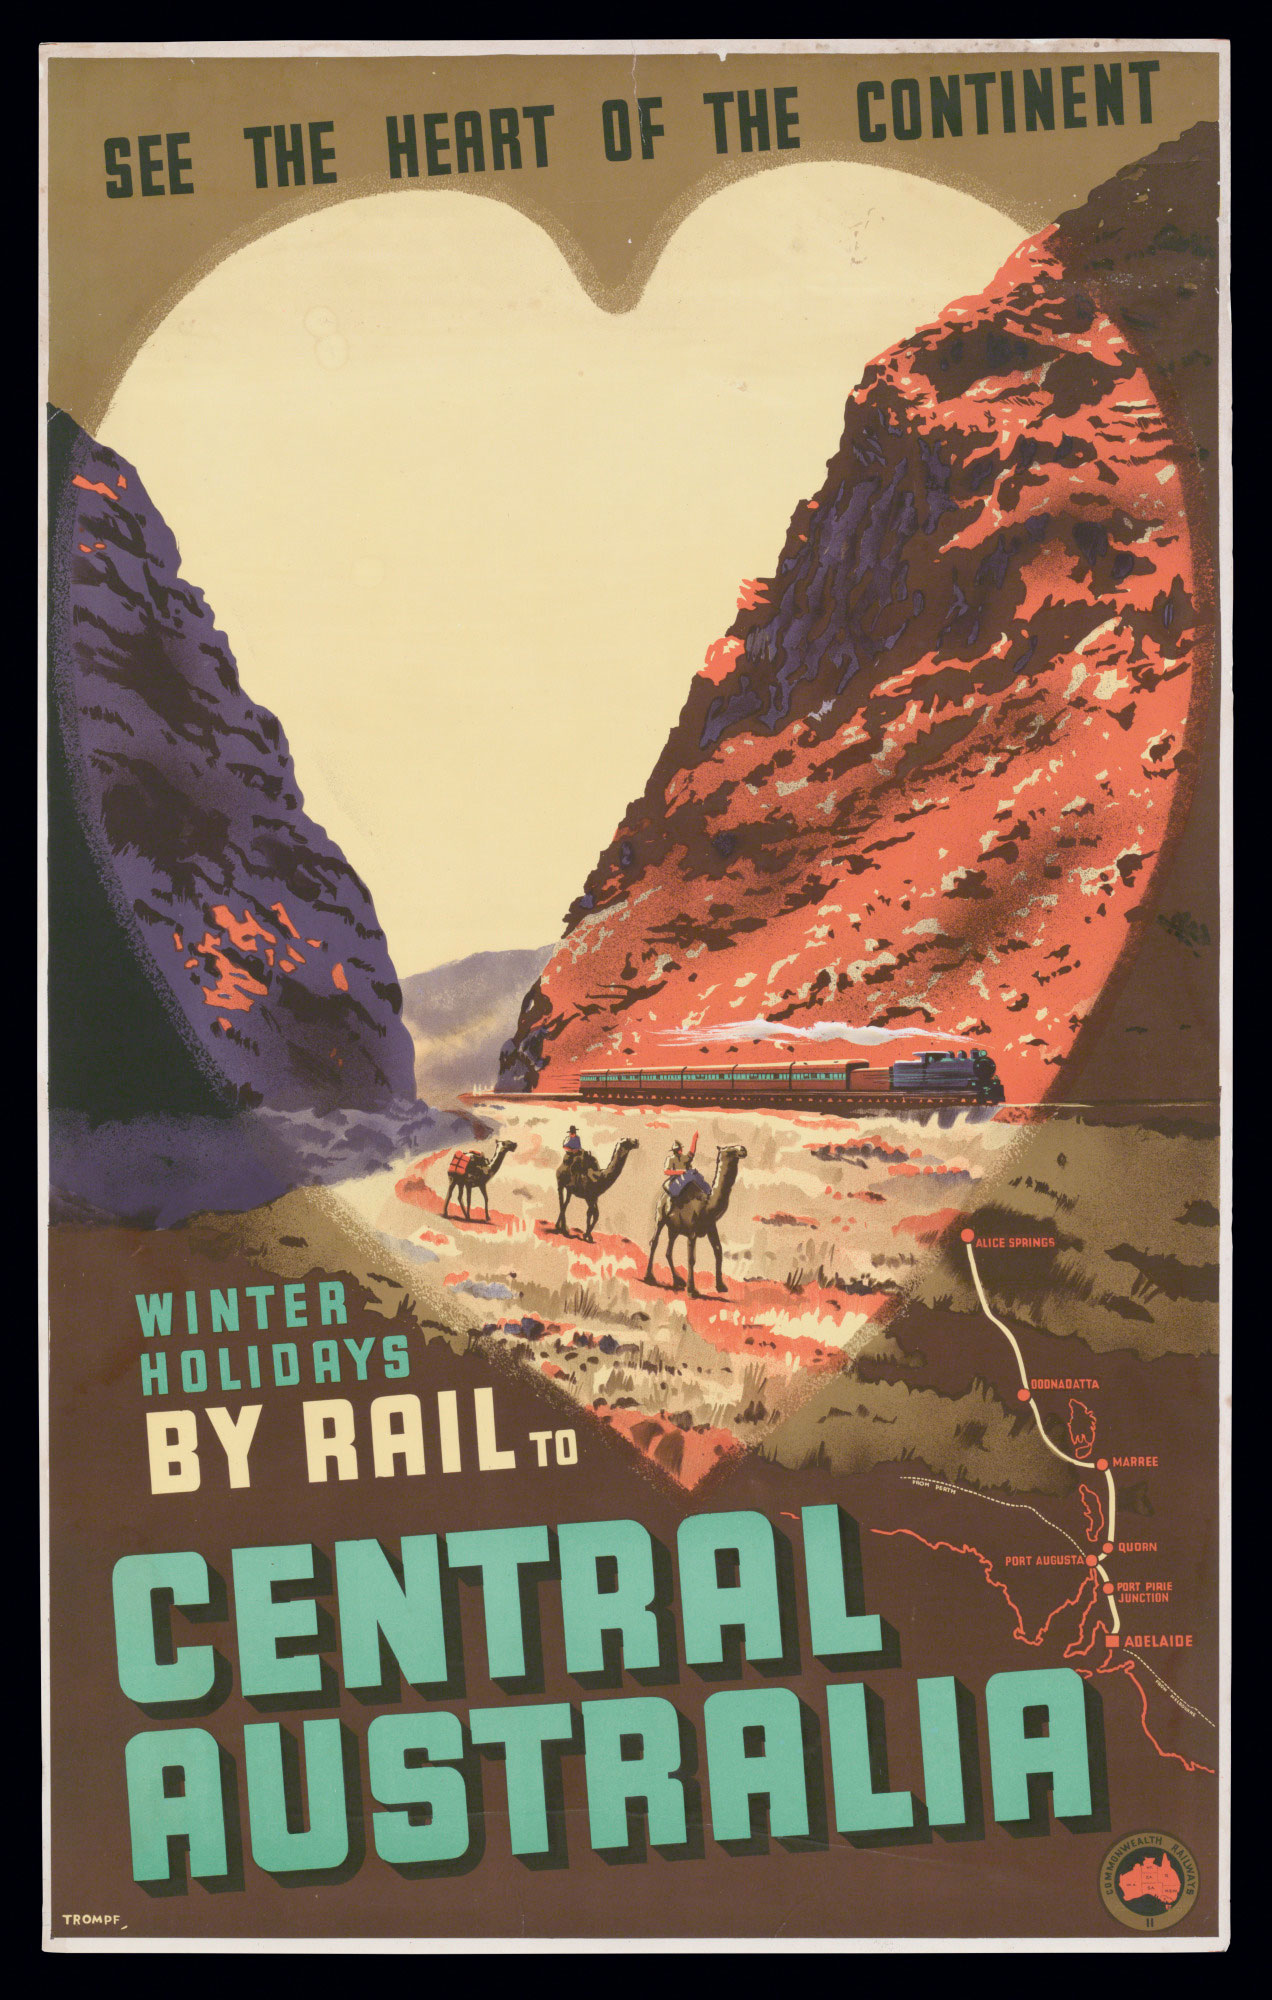 Poster advertising rail travel.